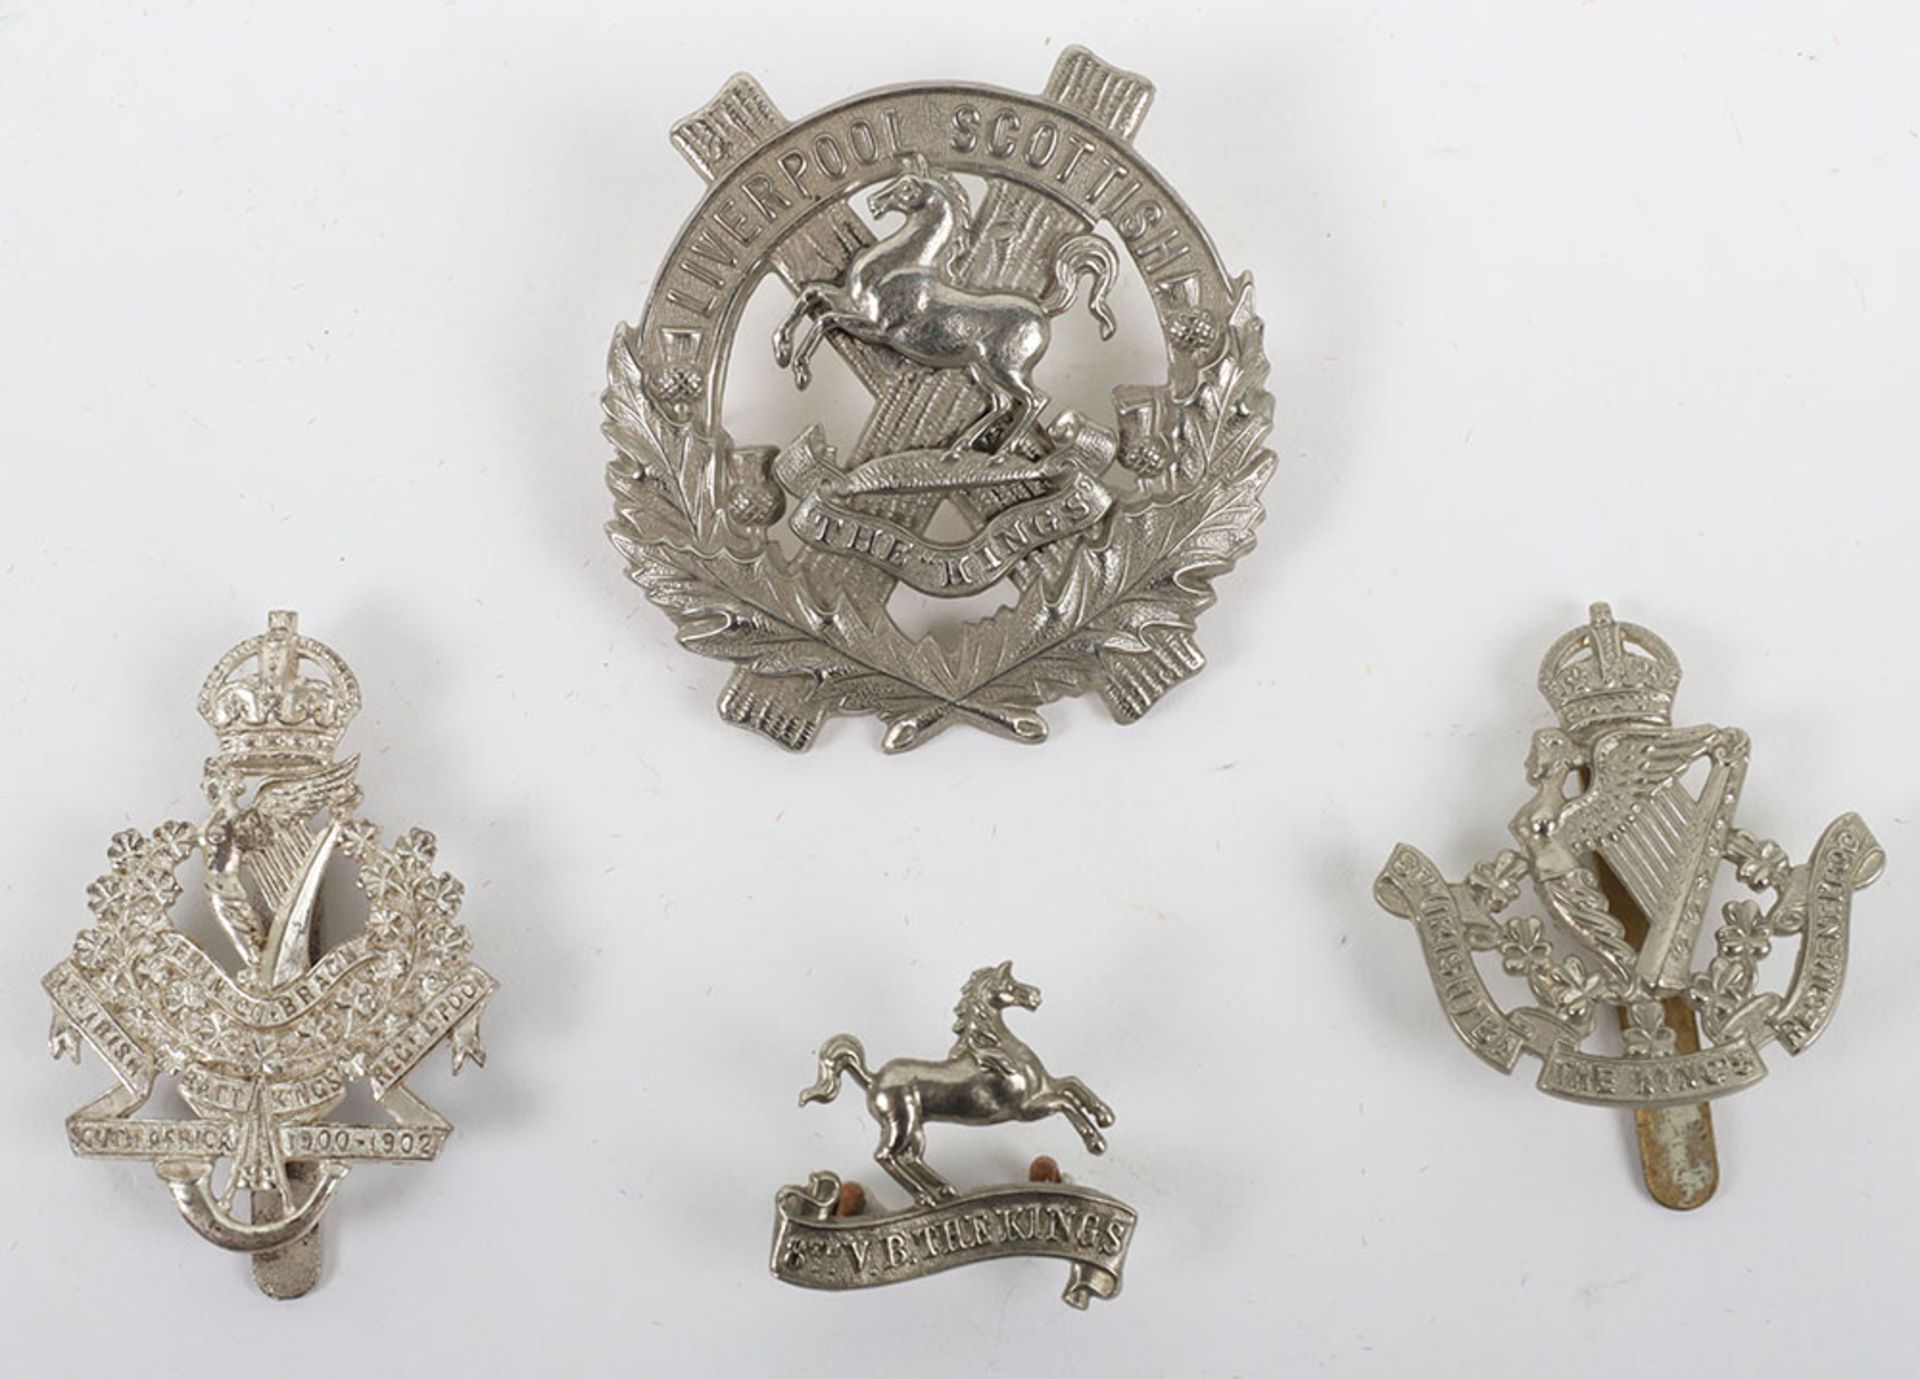 Scarce 8th (Irish) Battalion Kings Liverpool Regiment NCO’s Cap Badge